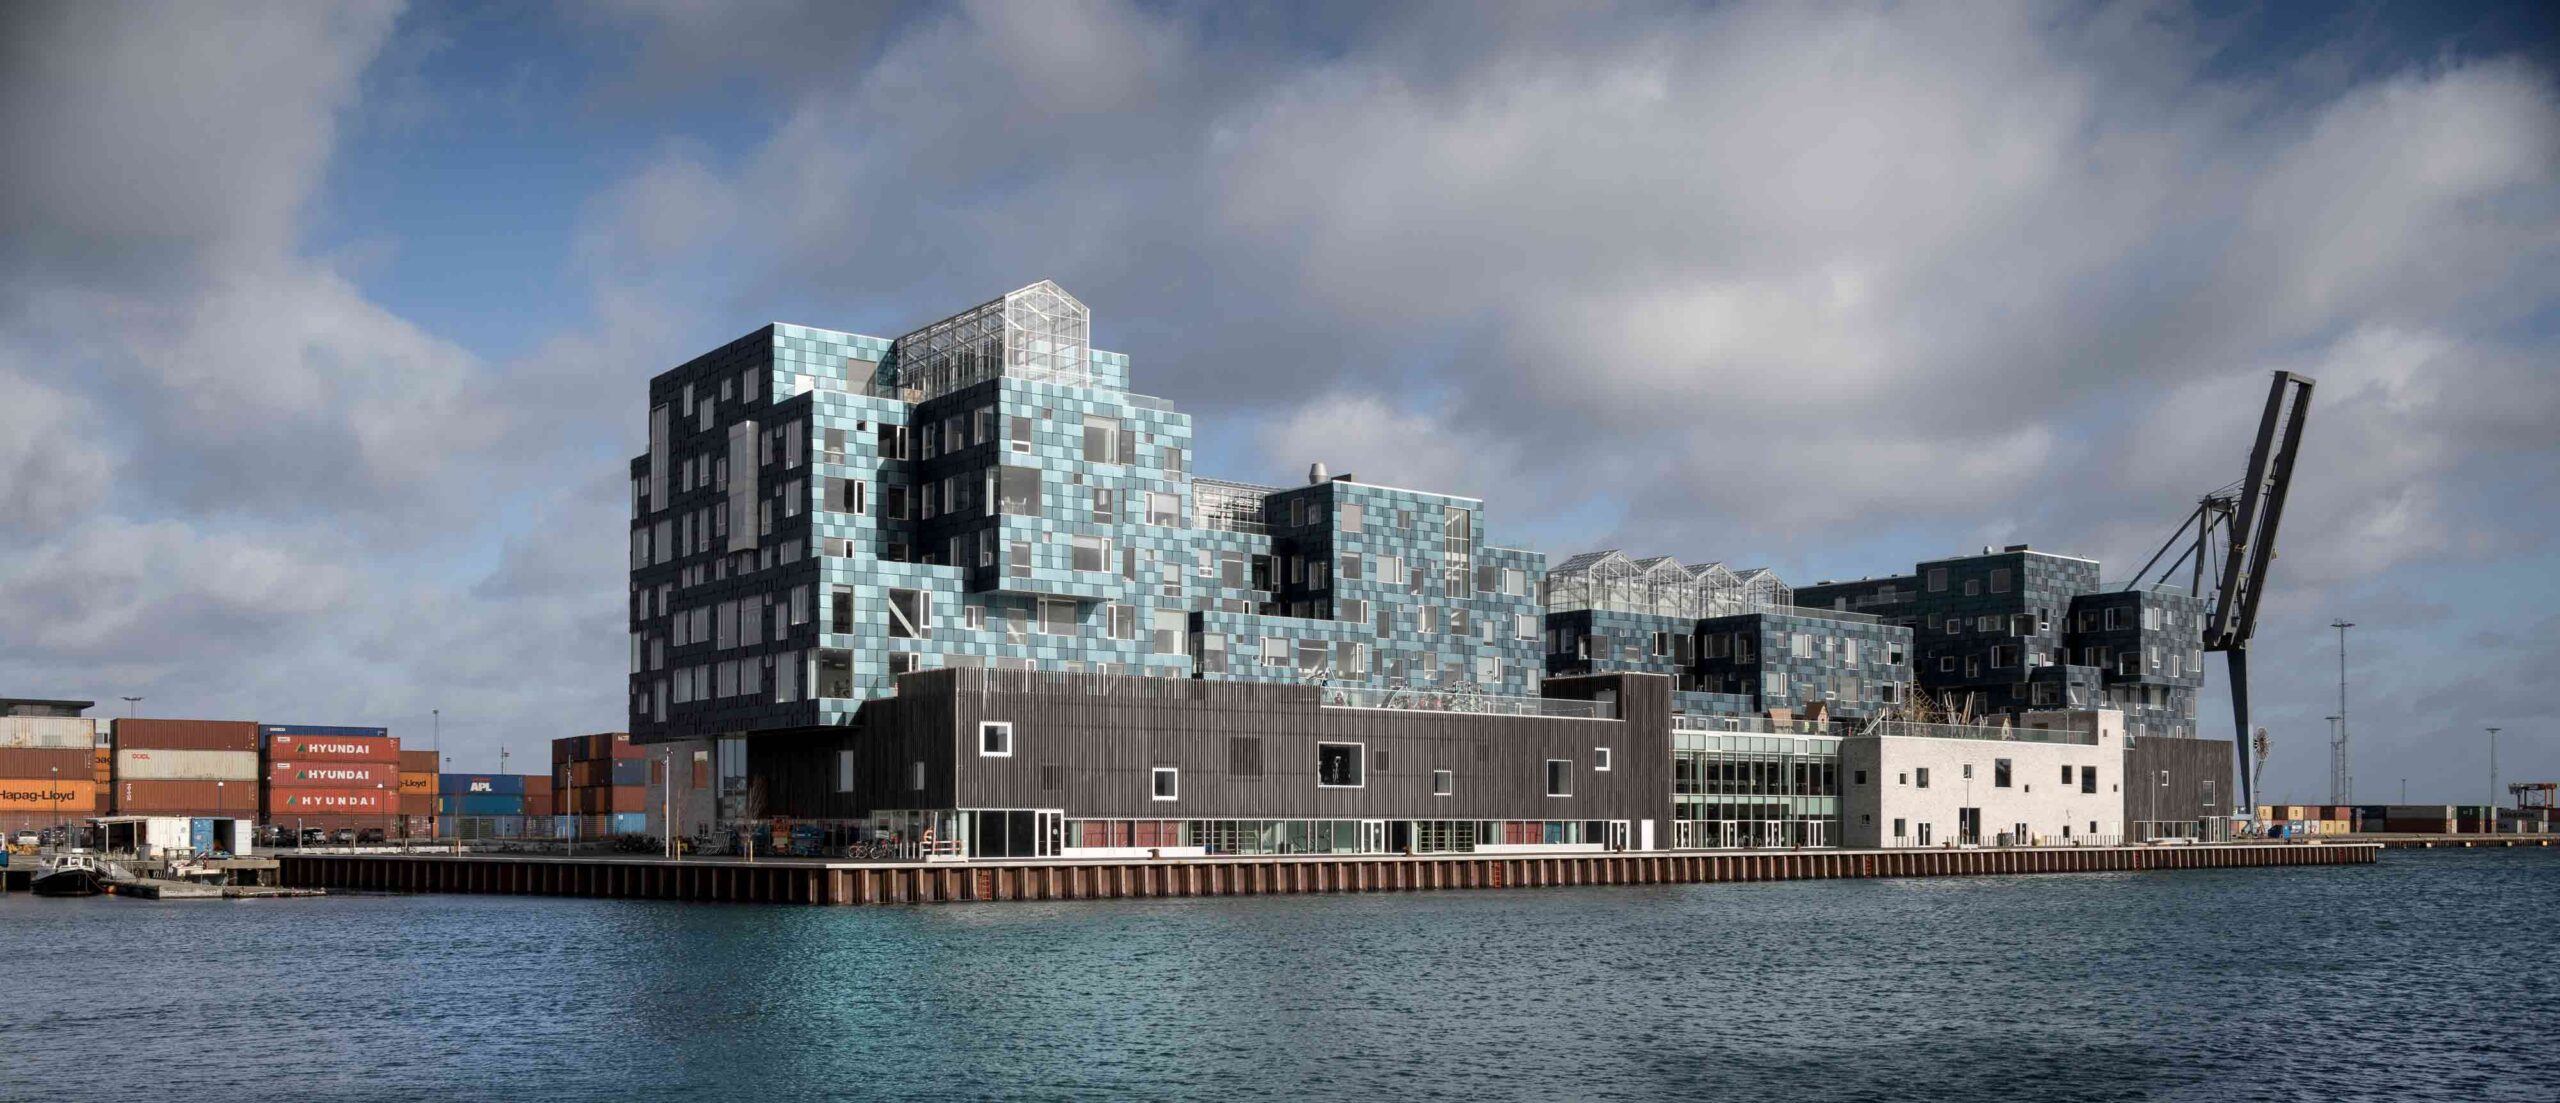 Copenhagen International School Nordhavn by C.F. Møller Architects